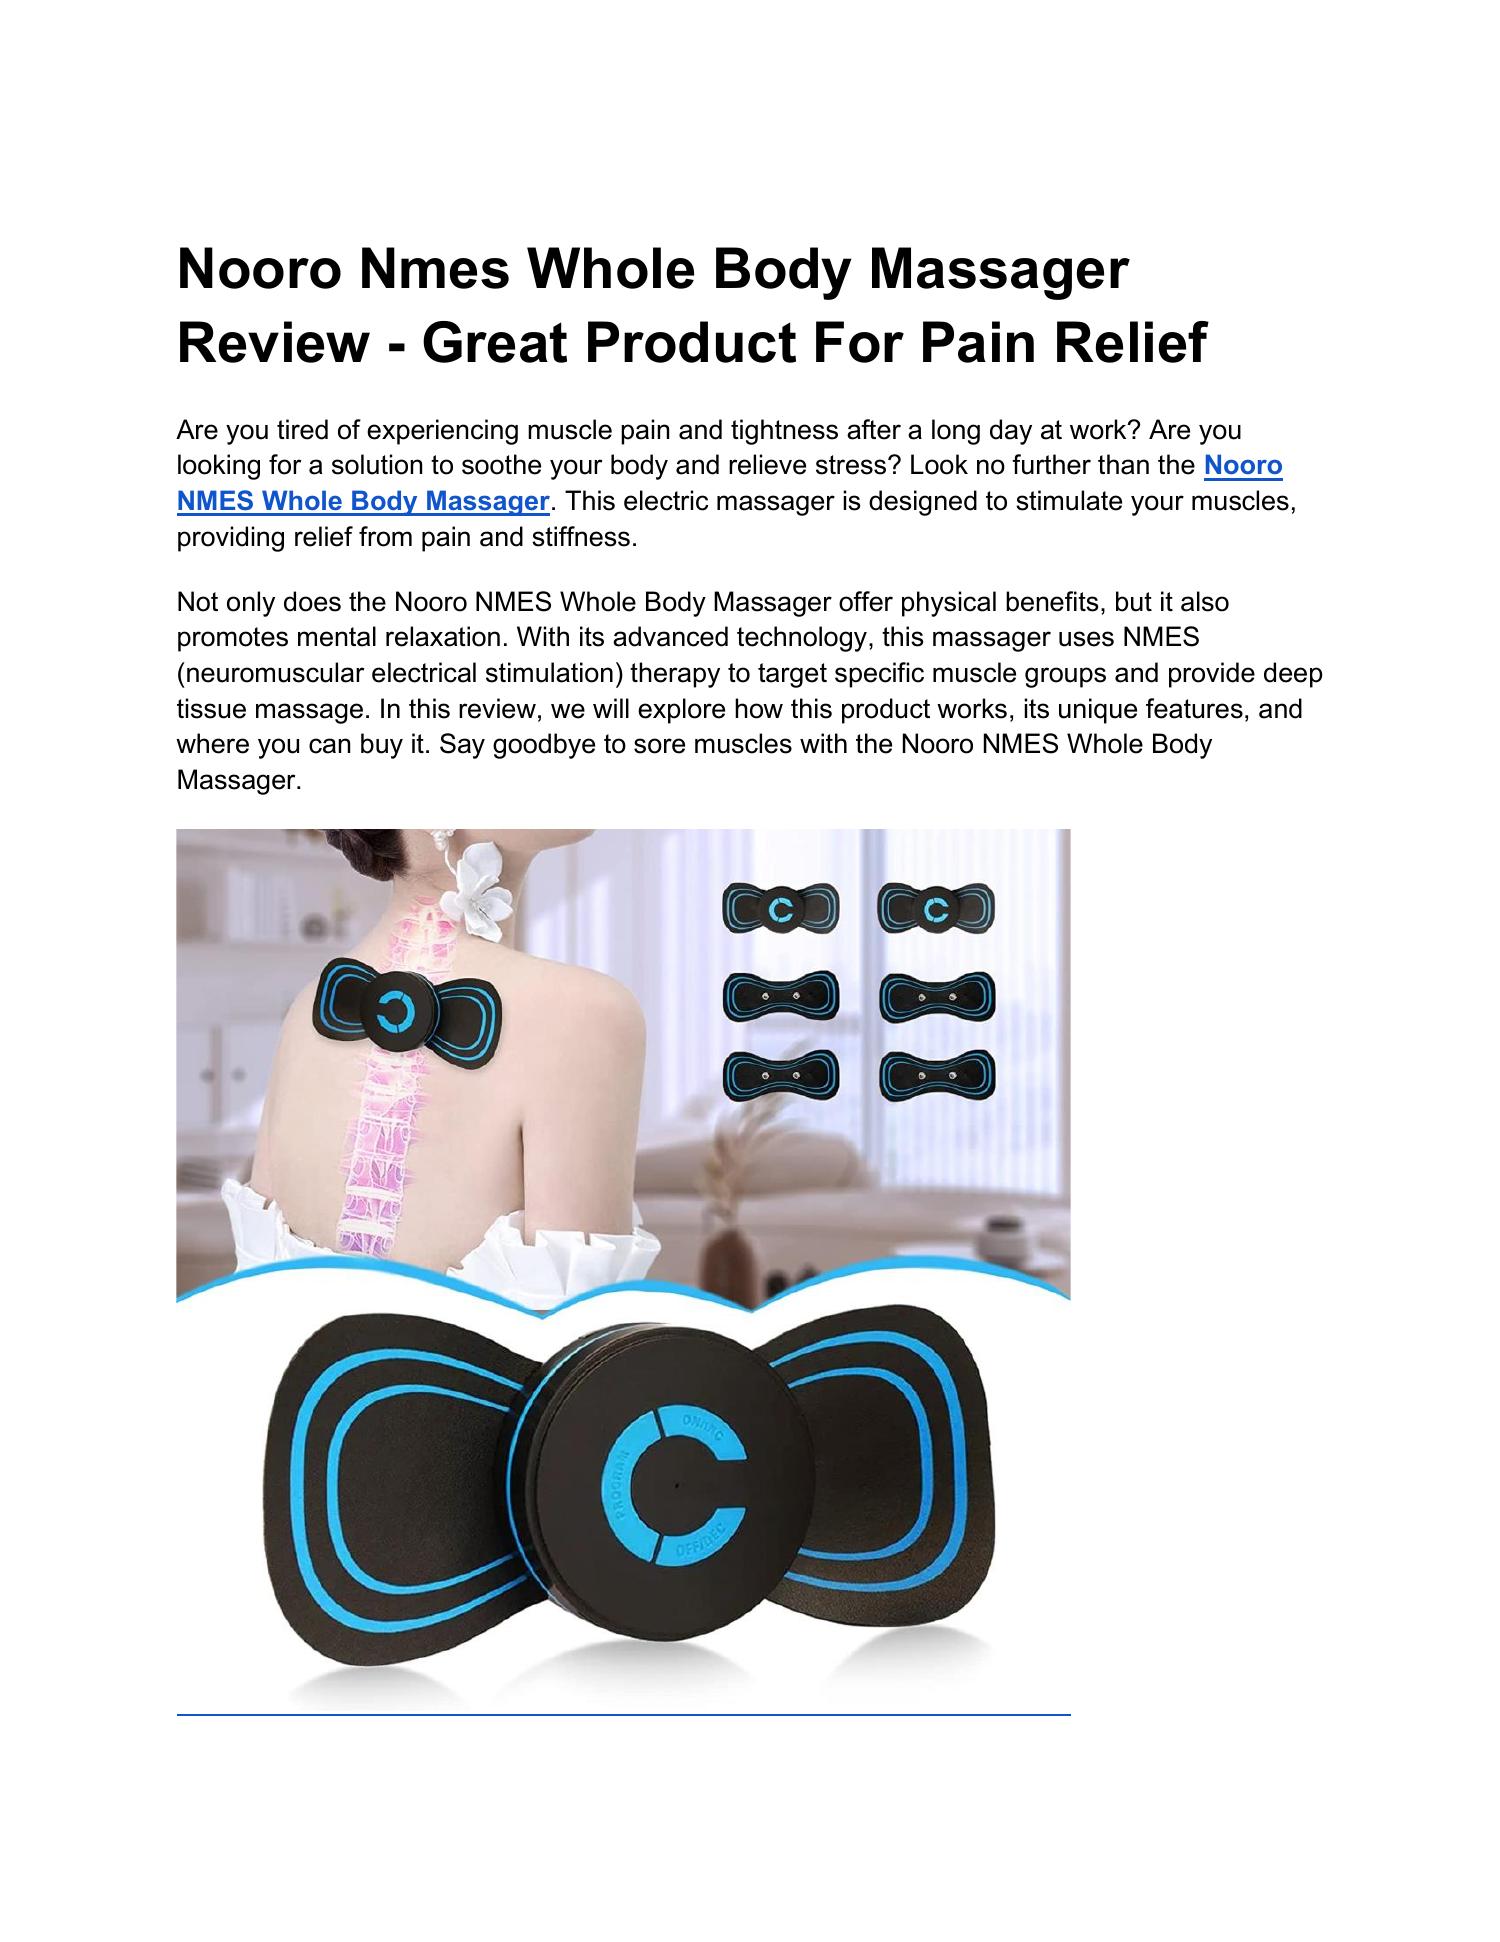 Nooro Whole Body Massager Testimonial 4 